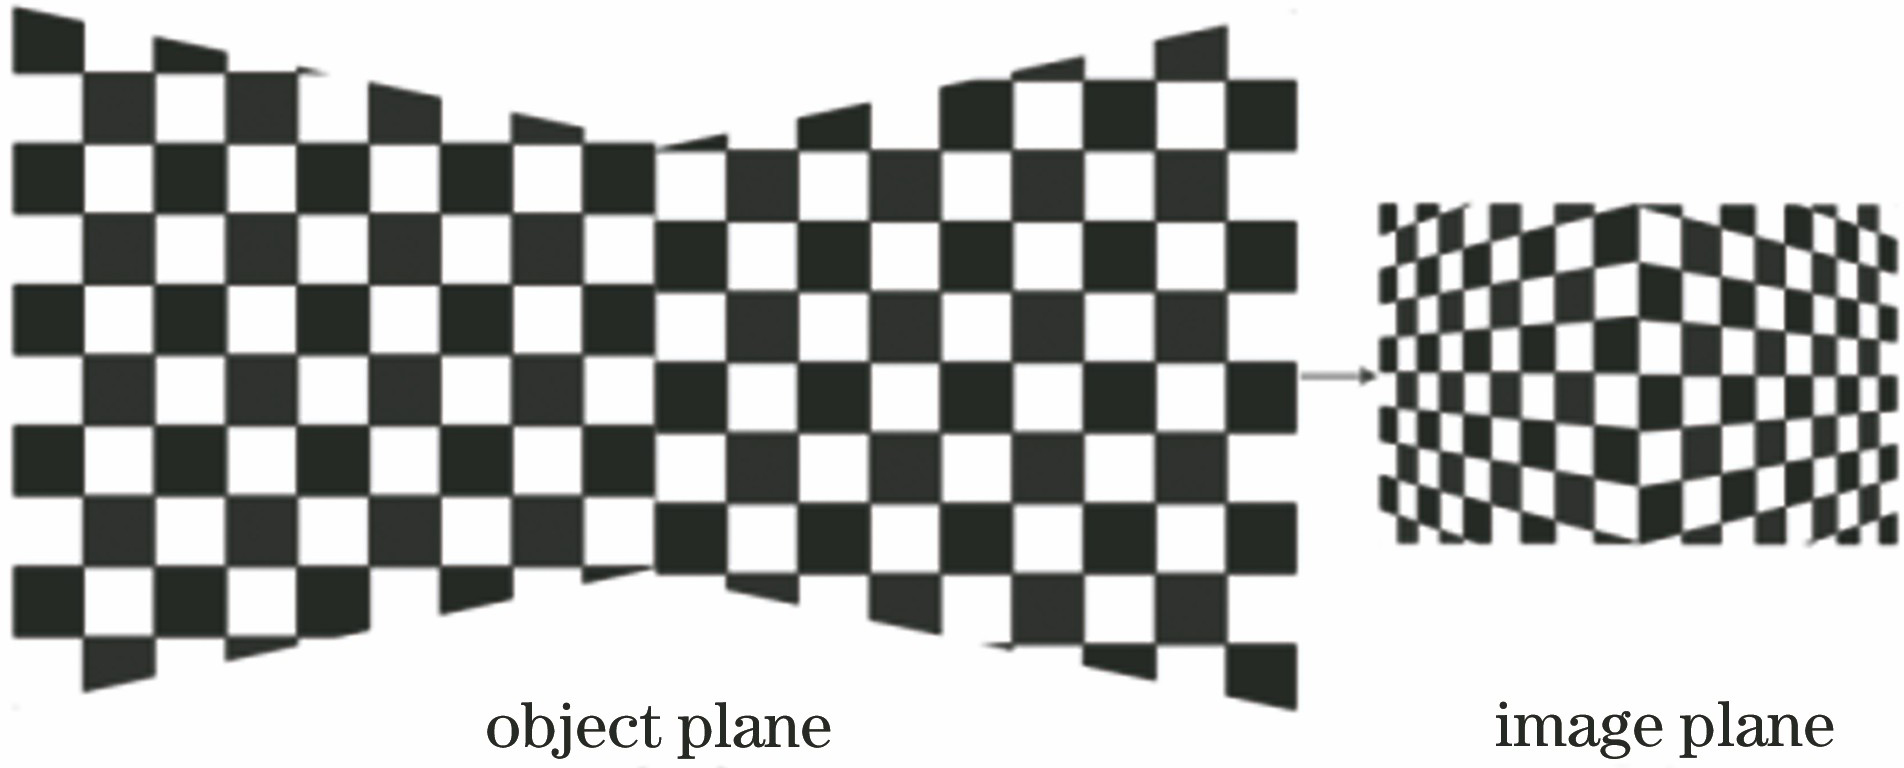 Distortion process of target image